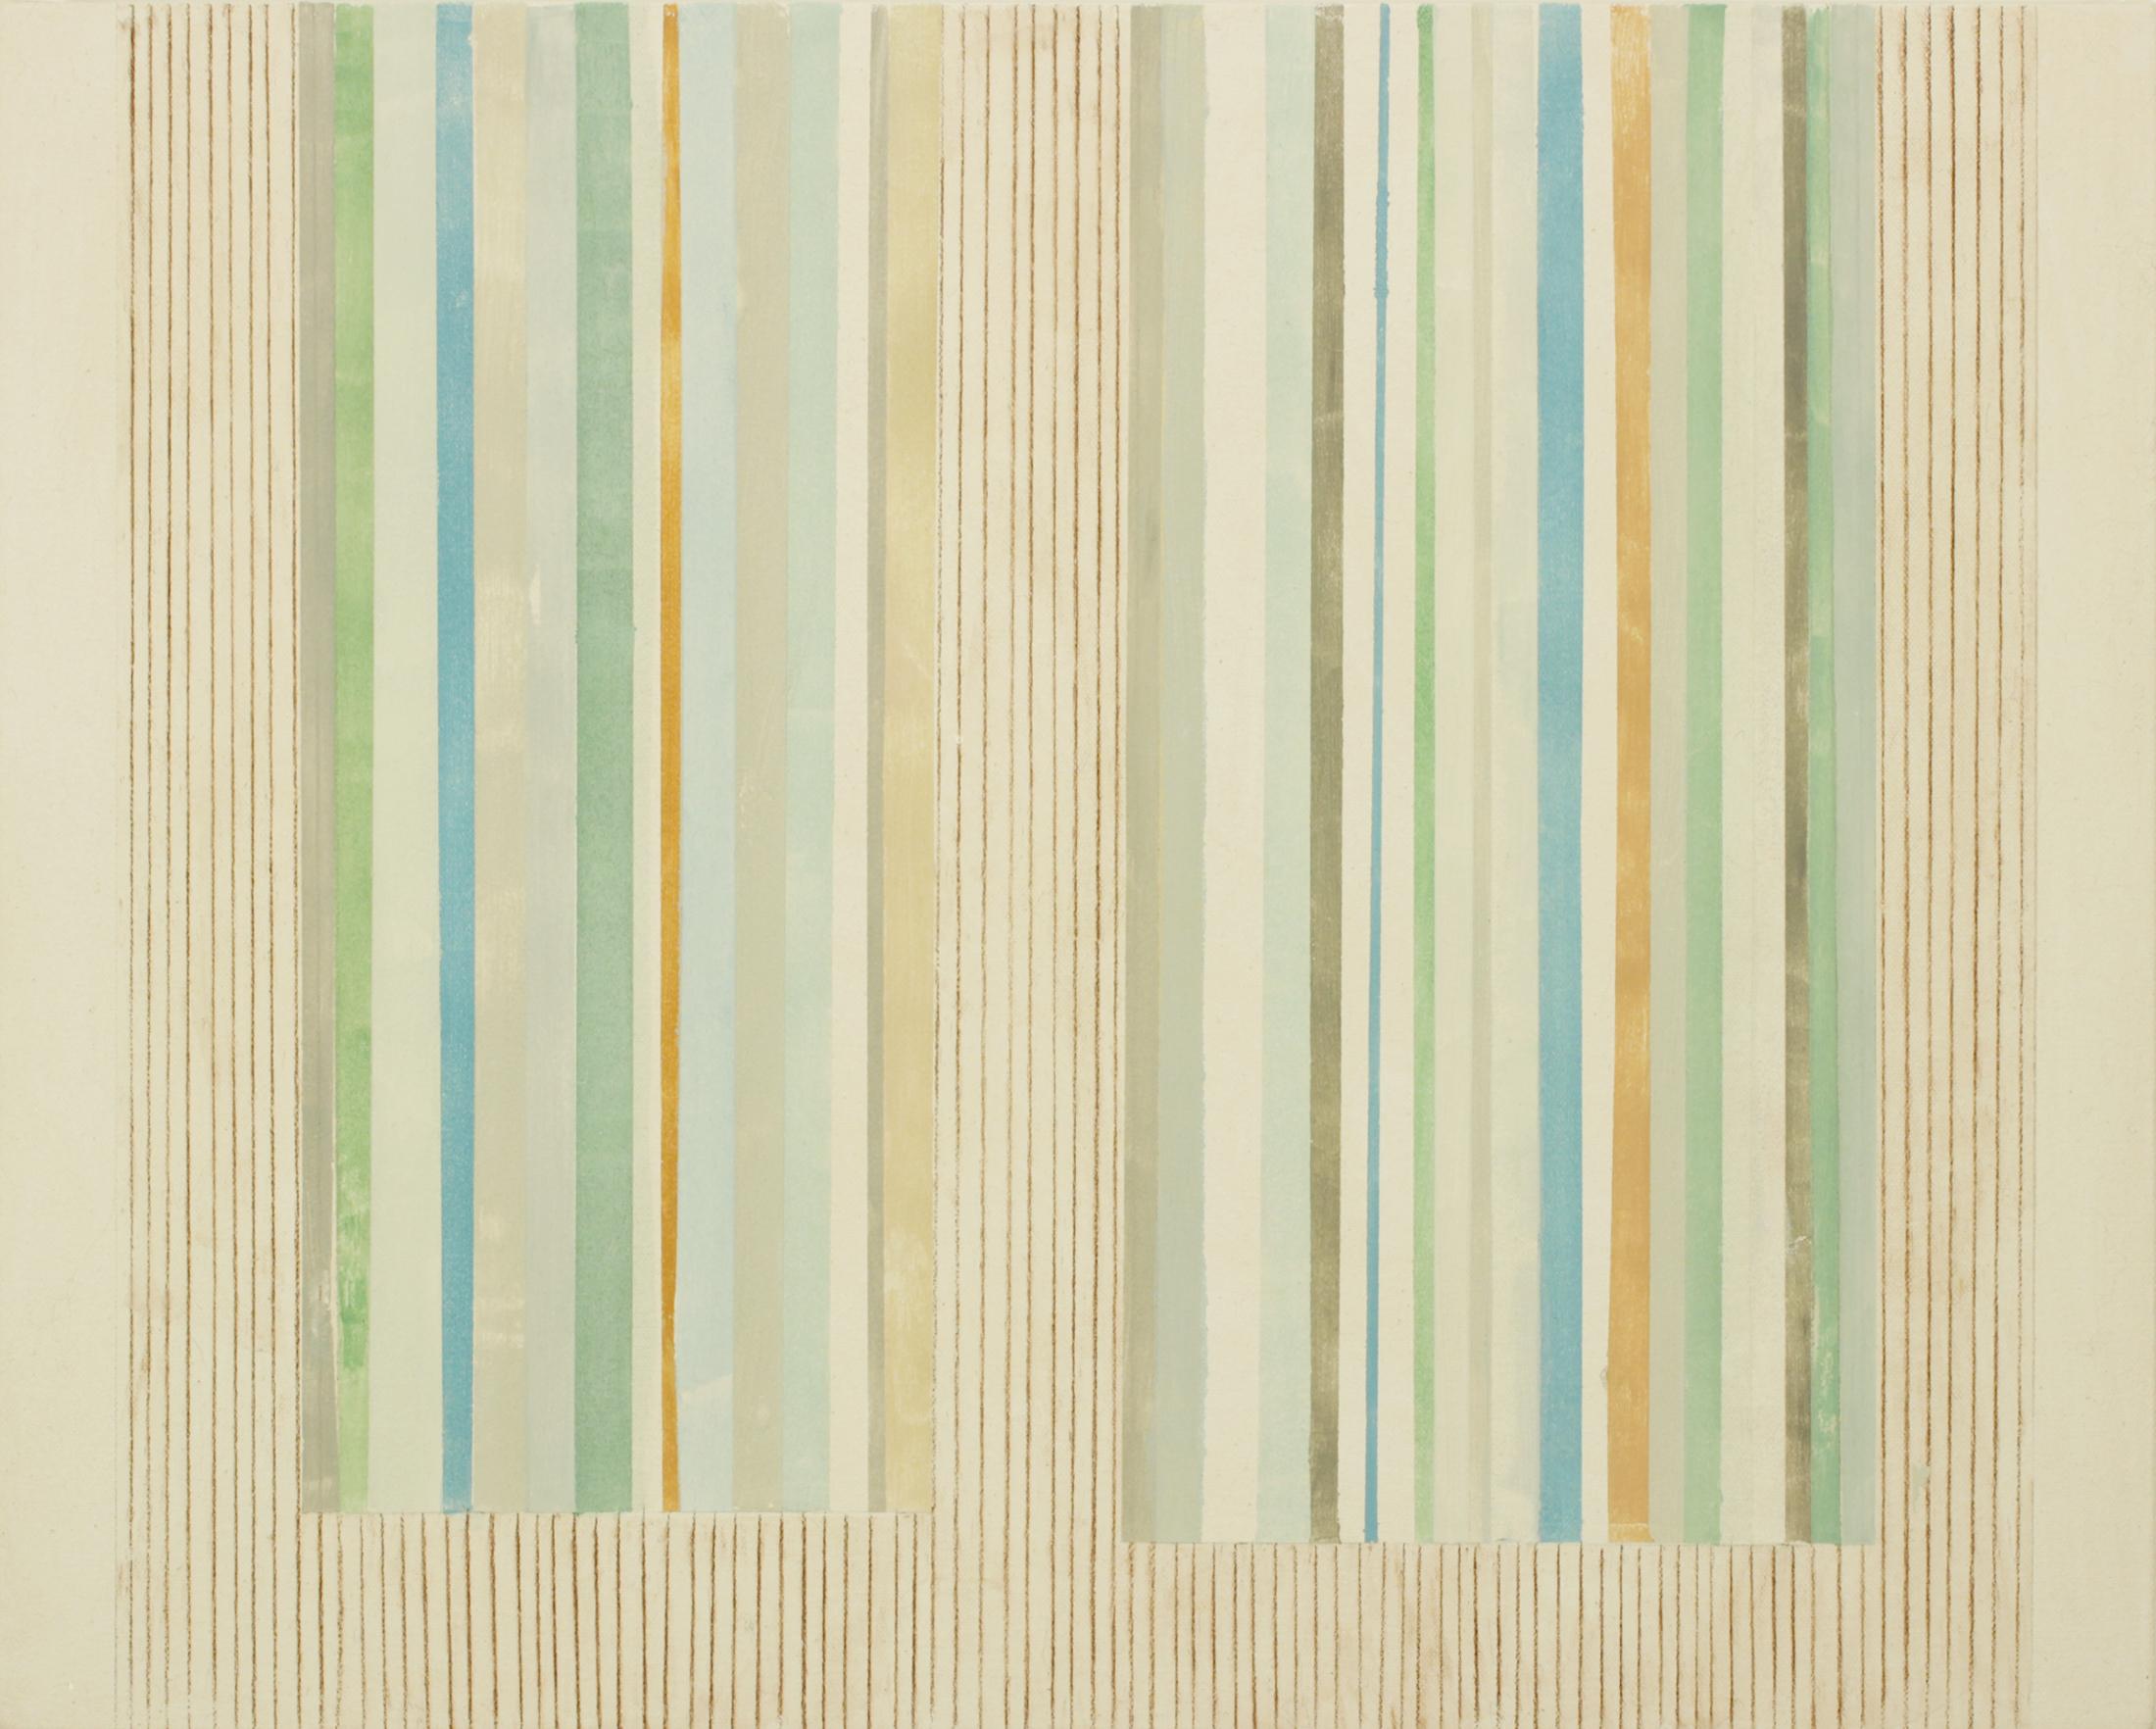 Elizabeth Gourlay Abstract Painting – AB 20, Abstraktes Gemälde, Beige, Grau, Blau, Grün, Braun, Dunkelgelber Ocker